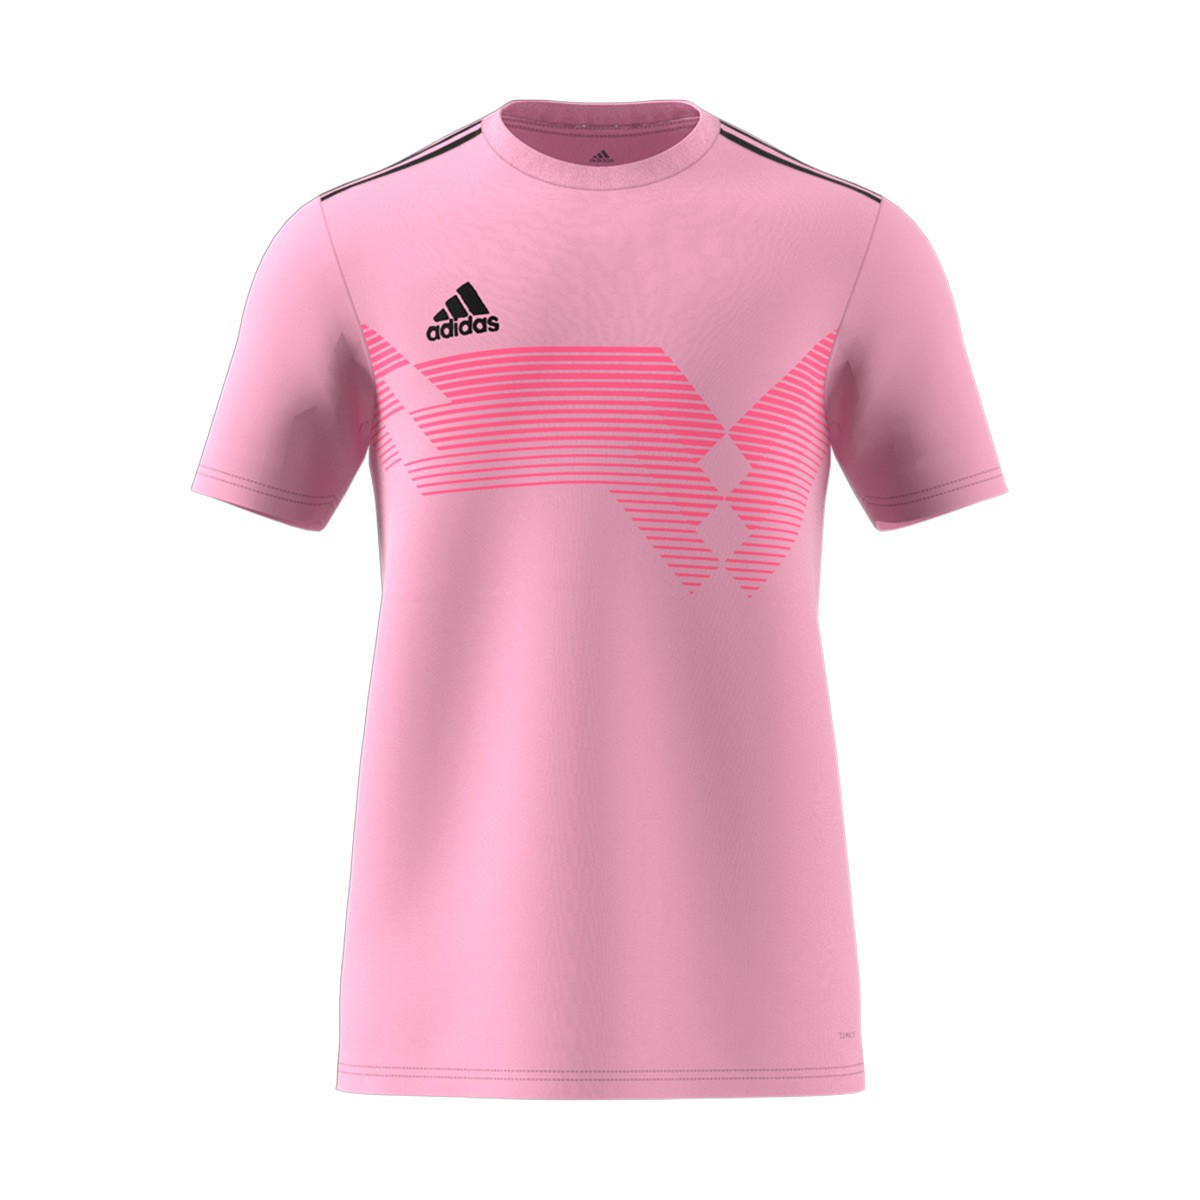 adidas Campeon 19 m/c True pink-Black 